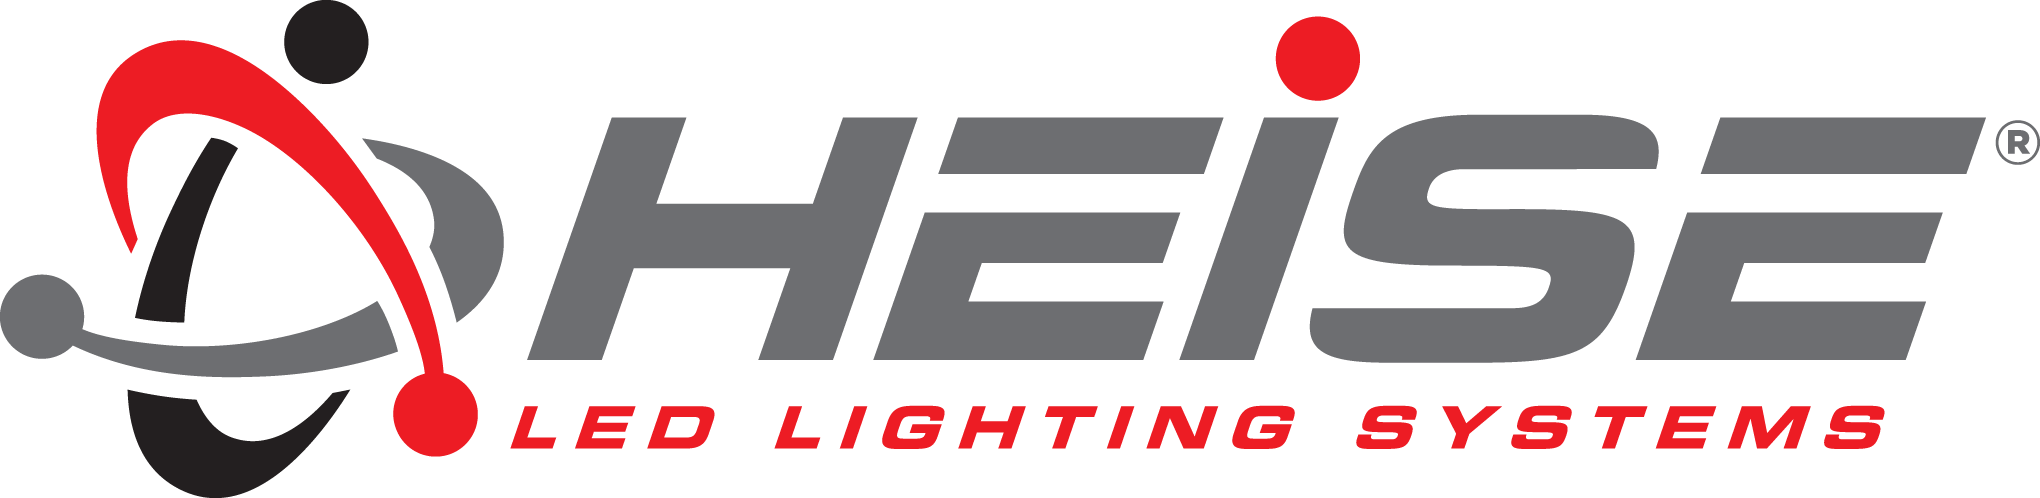 Heise LED Lighting Systems